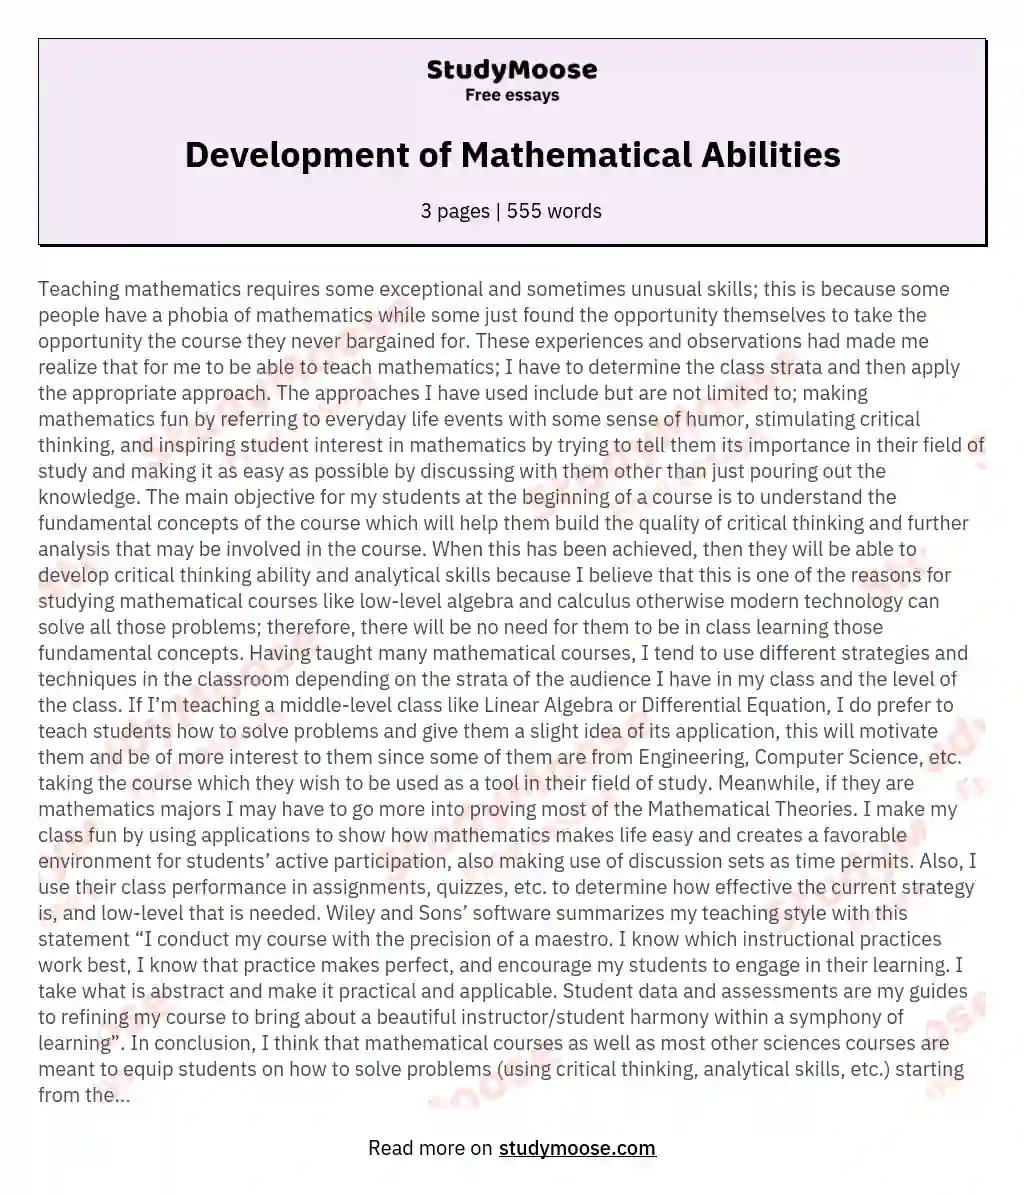 Development of Mathematical Abilities essay